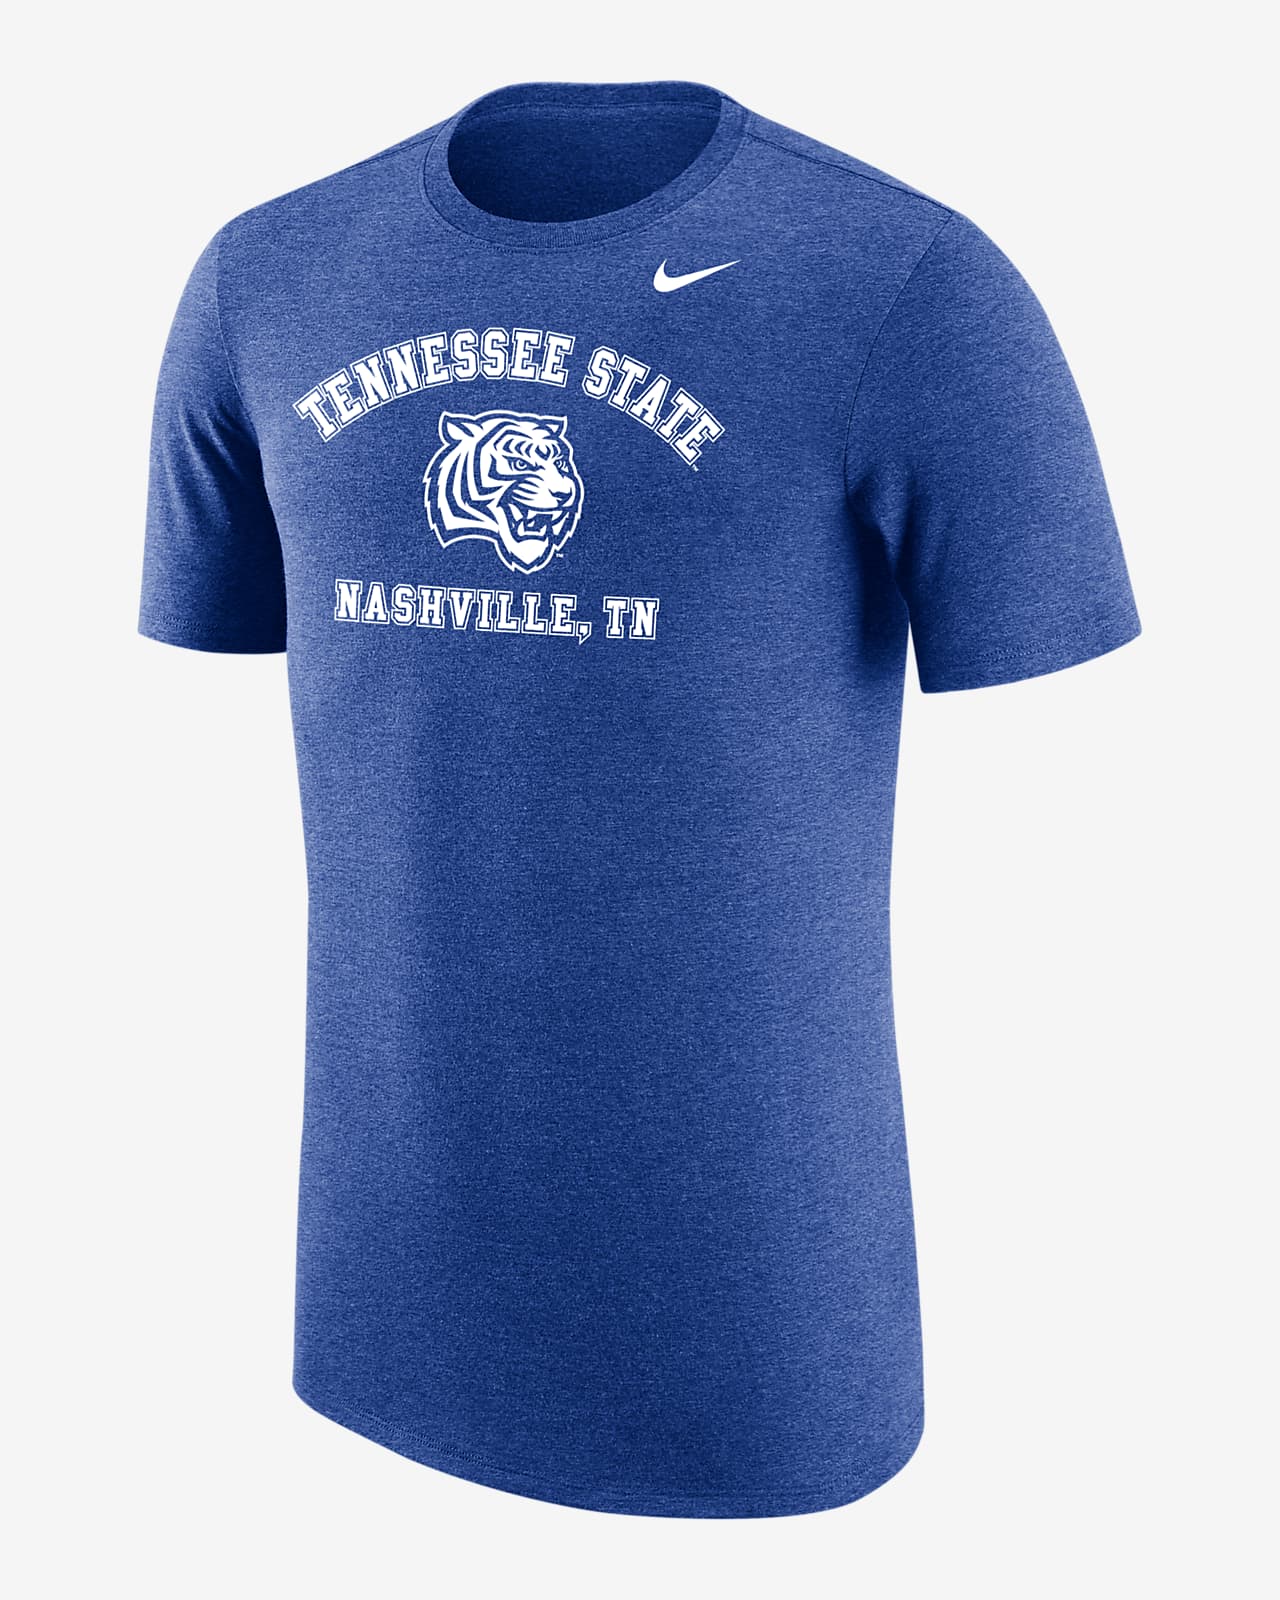 Playera universitaria Nike para hombre de Tennessee State